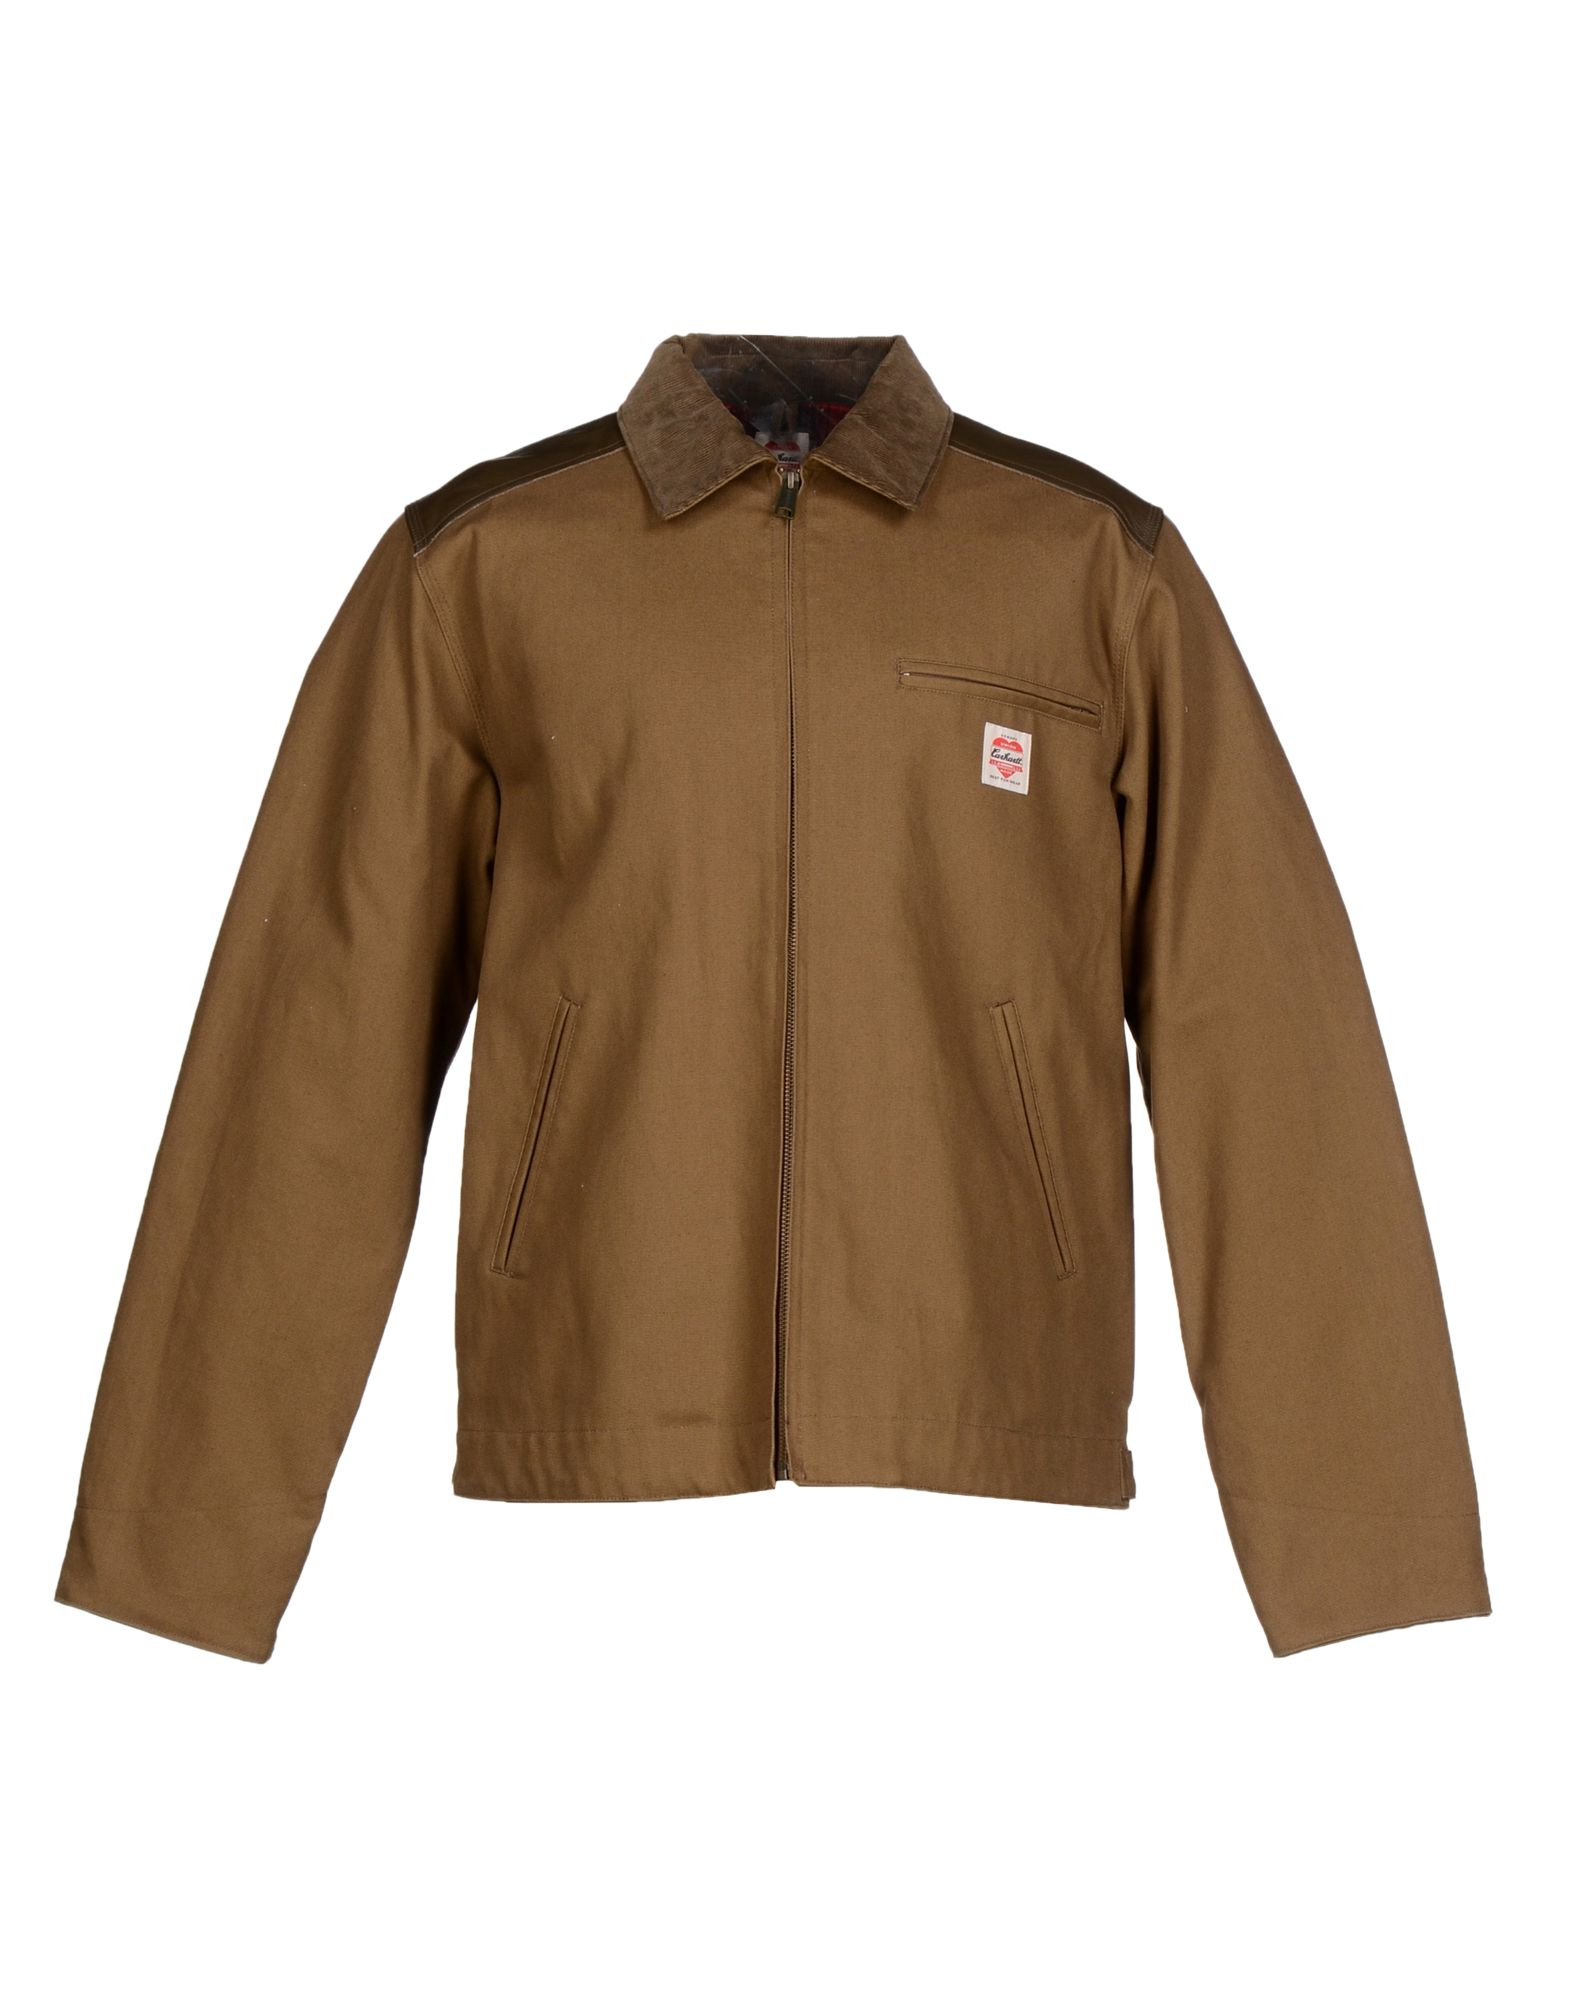 Carhartt Jacket in Khaki for Men | Lyst